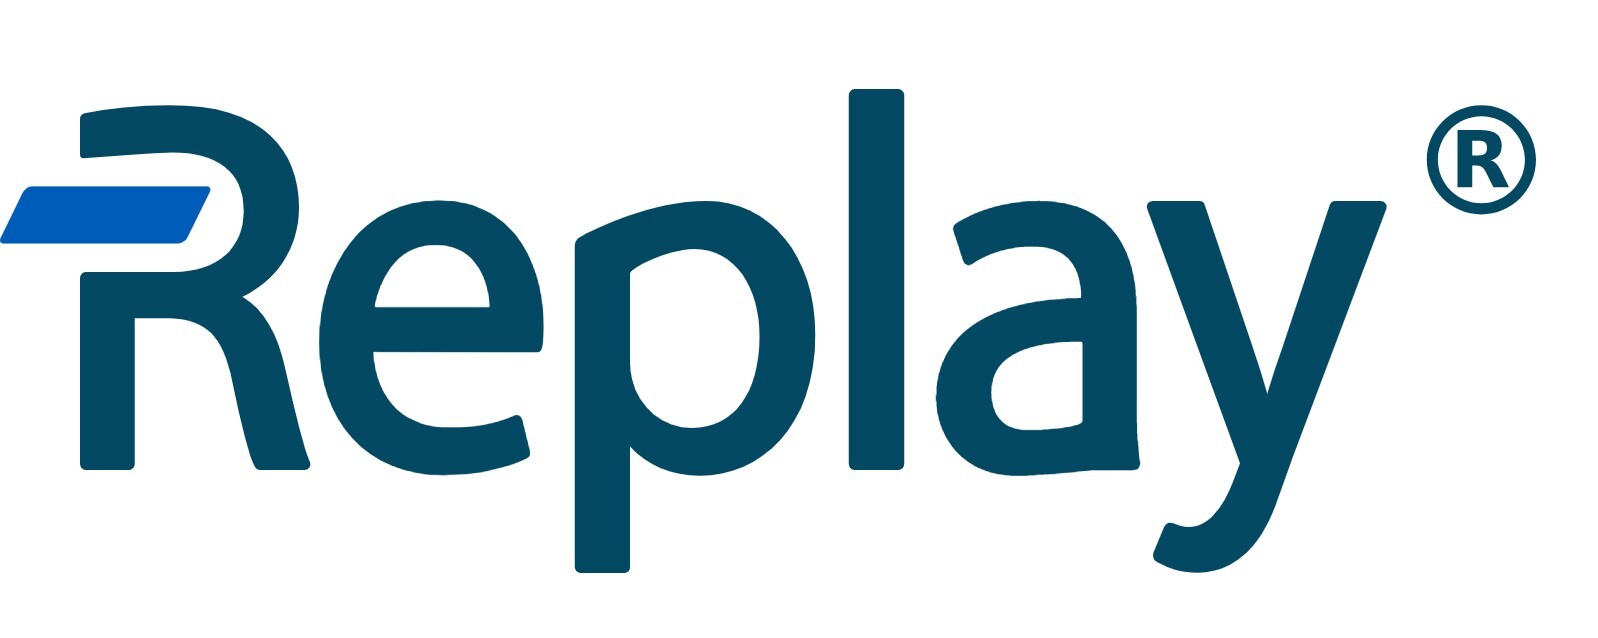 логотип Replay